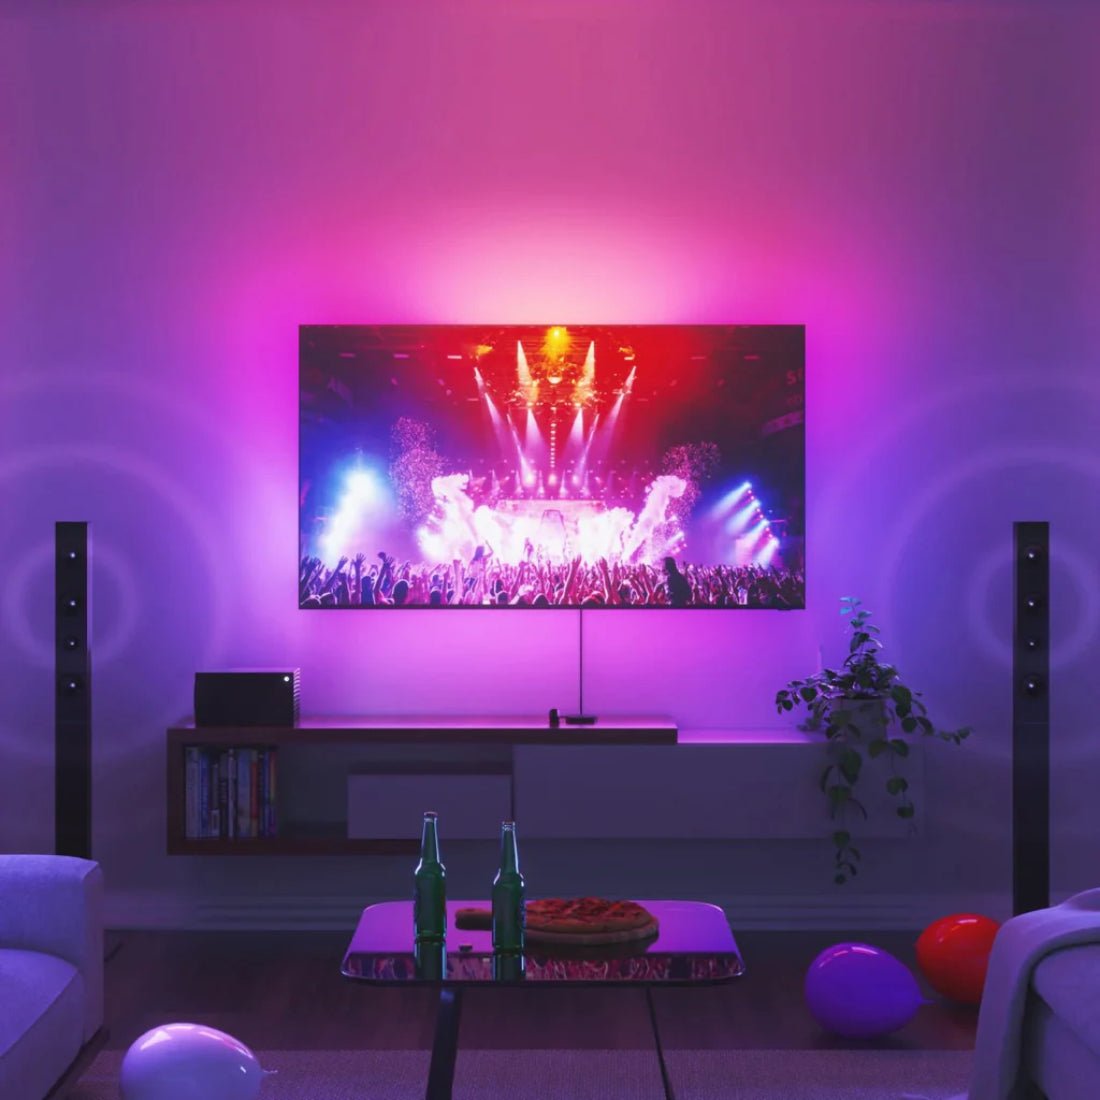 Nanoleaf 4D TV Screen Mirror + Lightstrip SMK For TVs up to 65